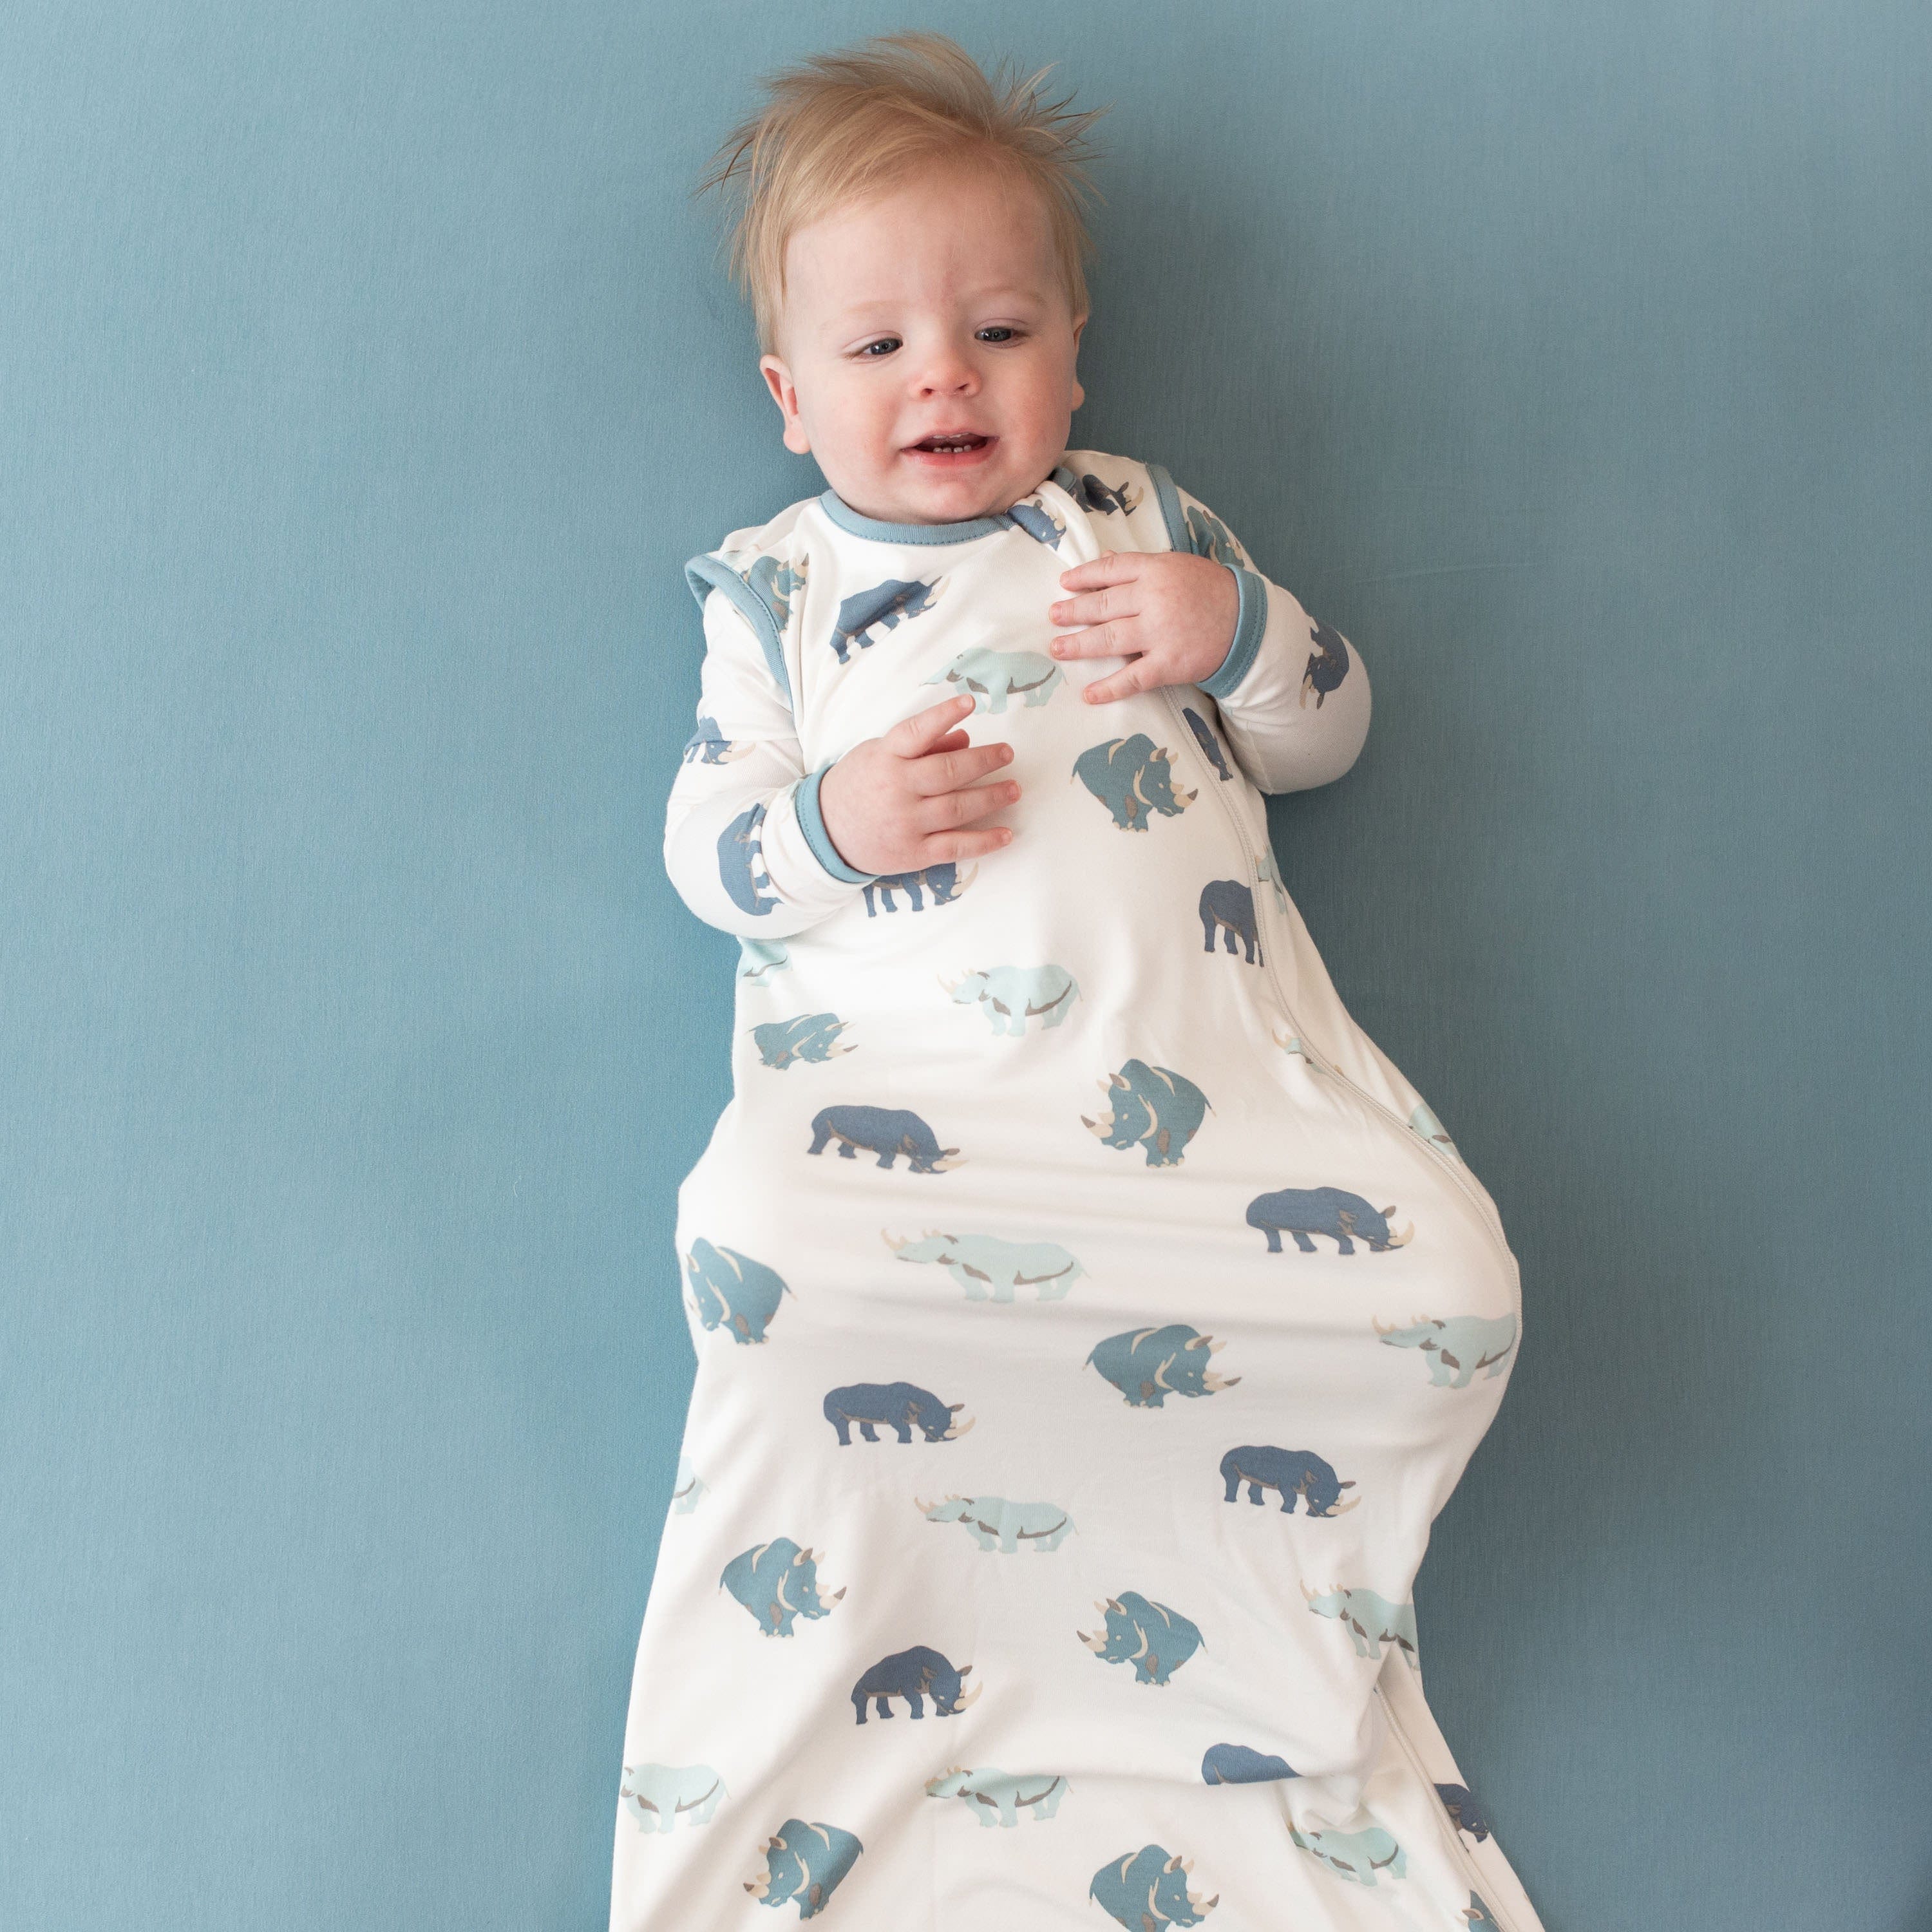 Infant wearing Kyte Baby Sleep Bag in Rhino 0.5